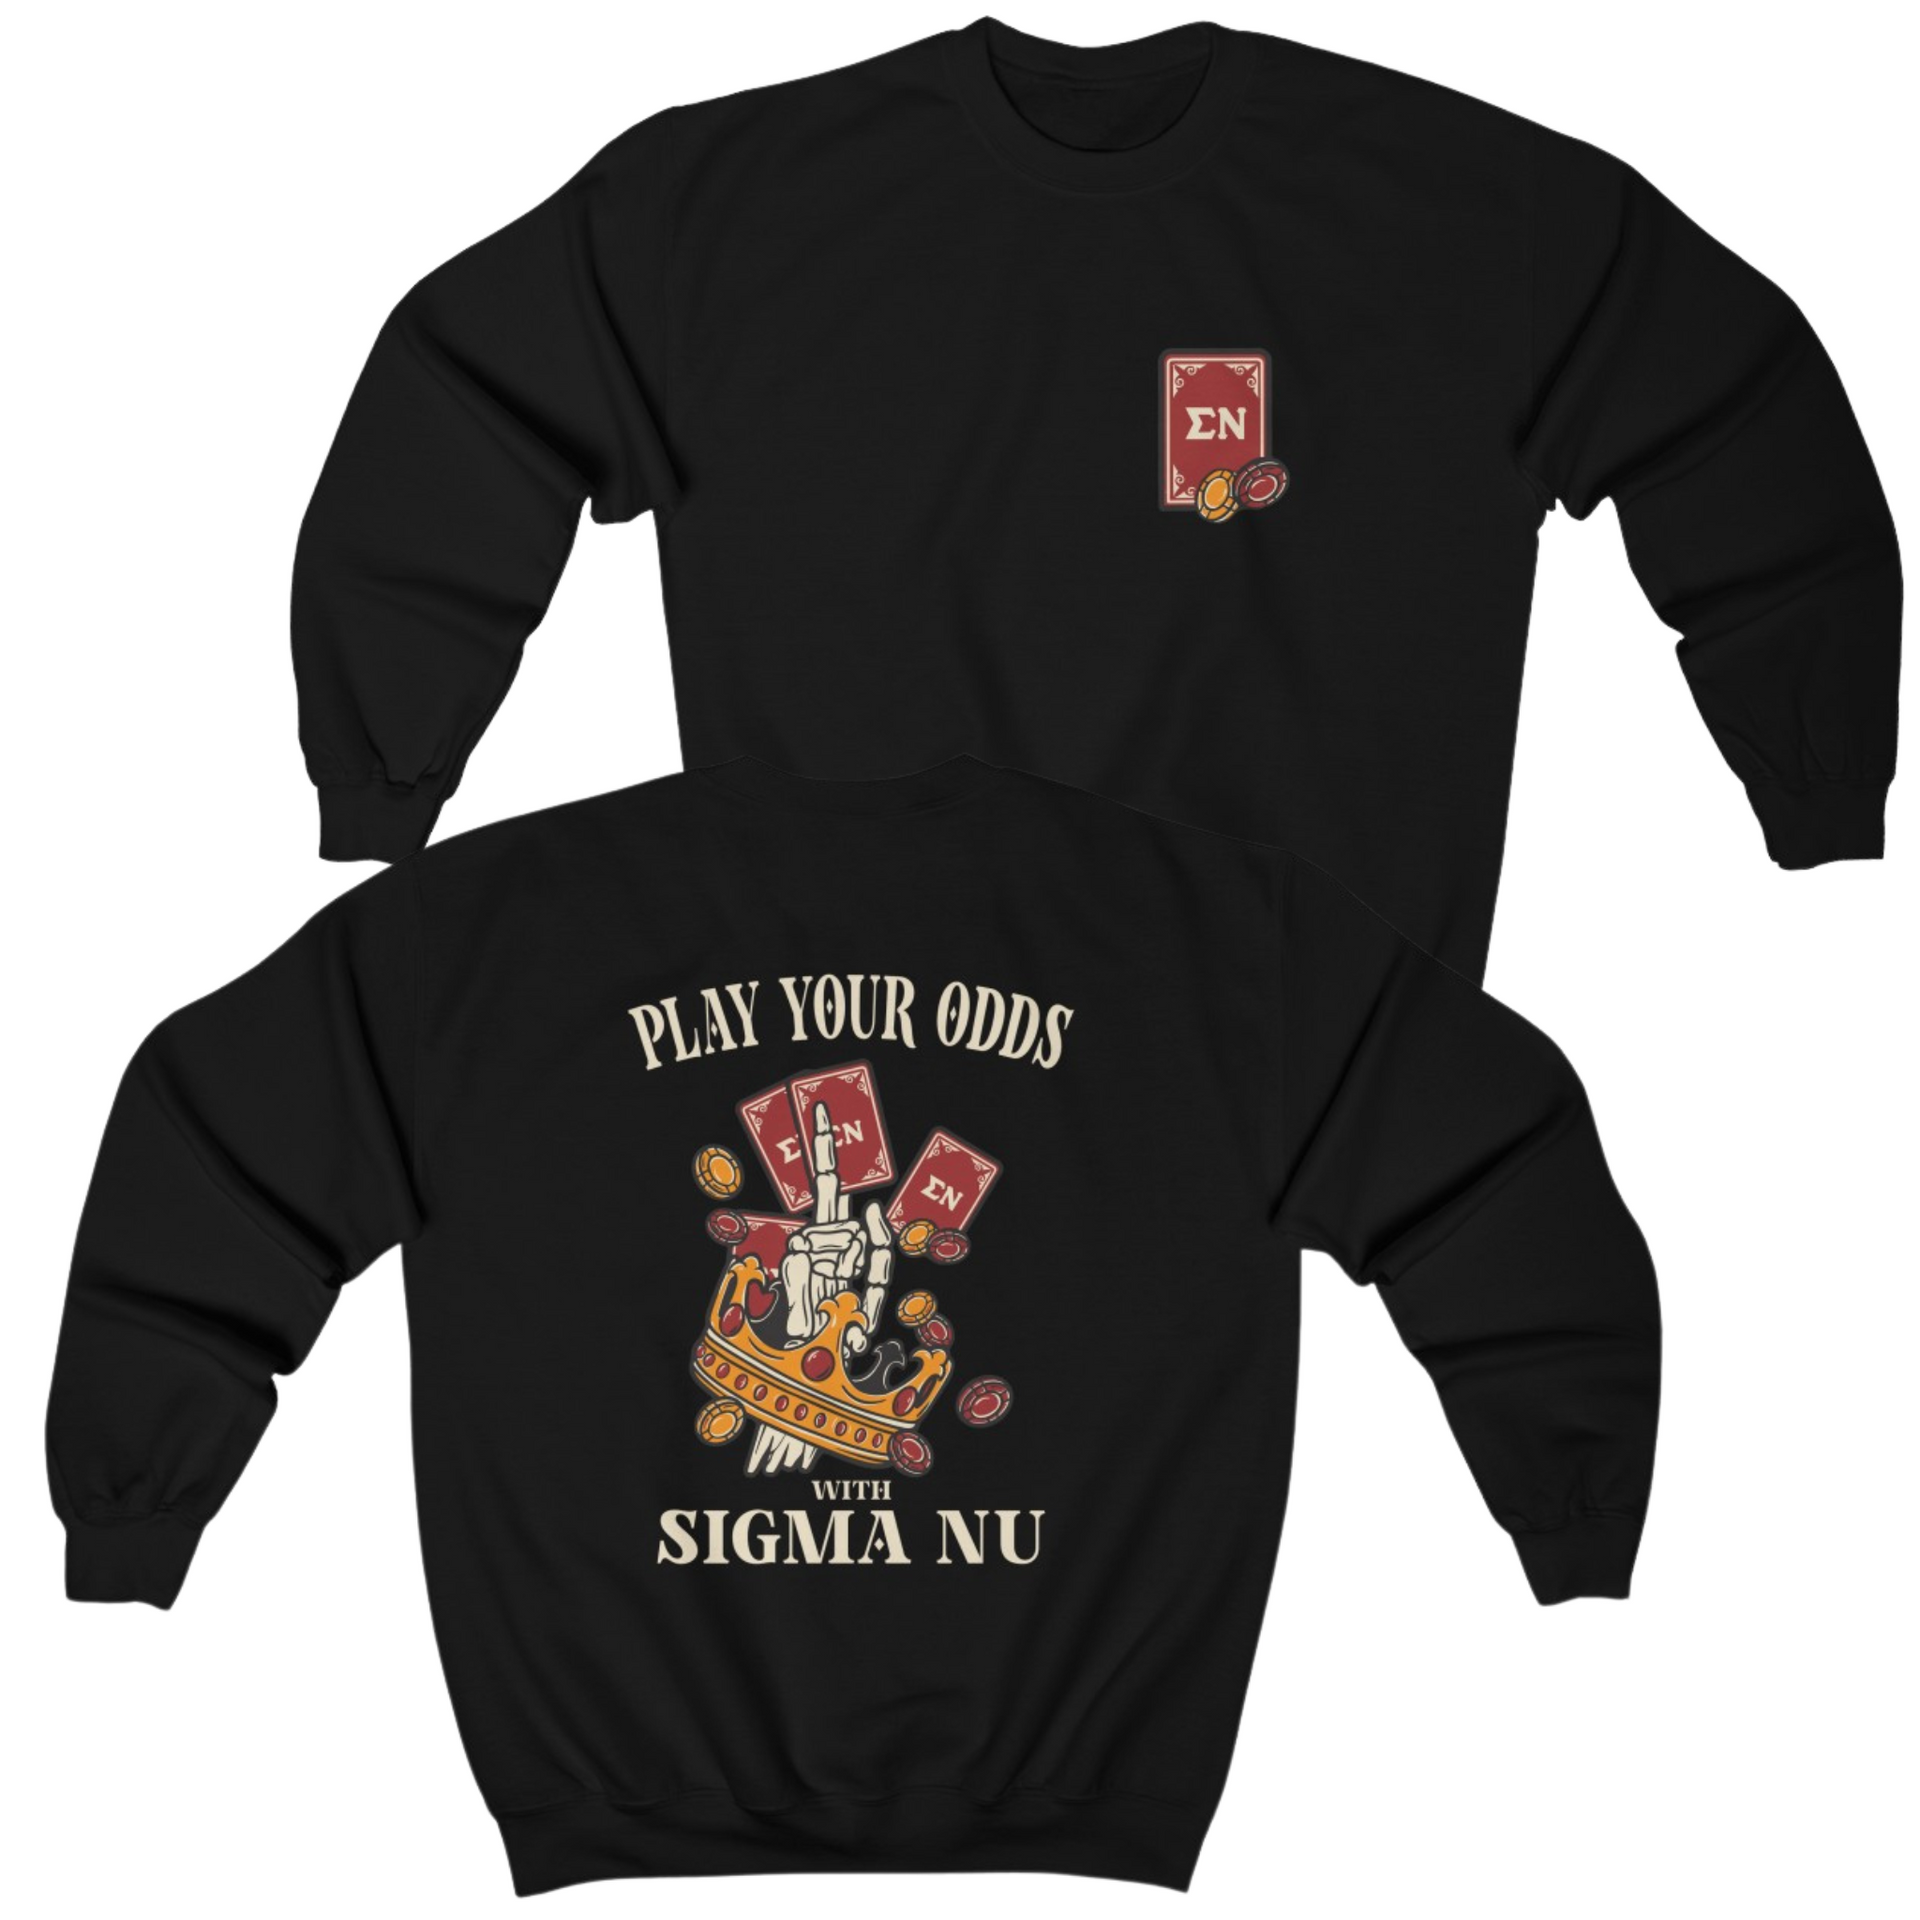 Black Sigma Nu Graphic Crewneck Sweatshirt | Play Your Odds | Sigma Nu Clothing, Apparel and Merchandise